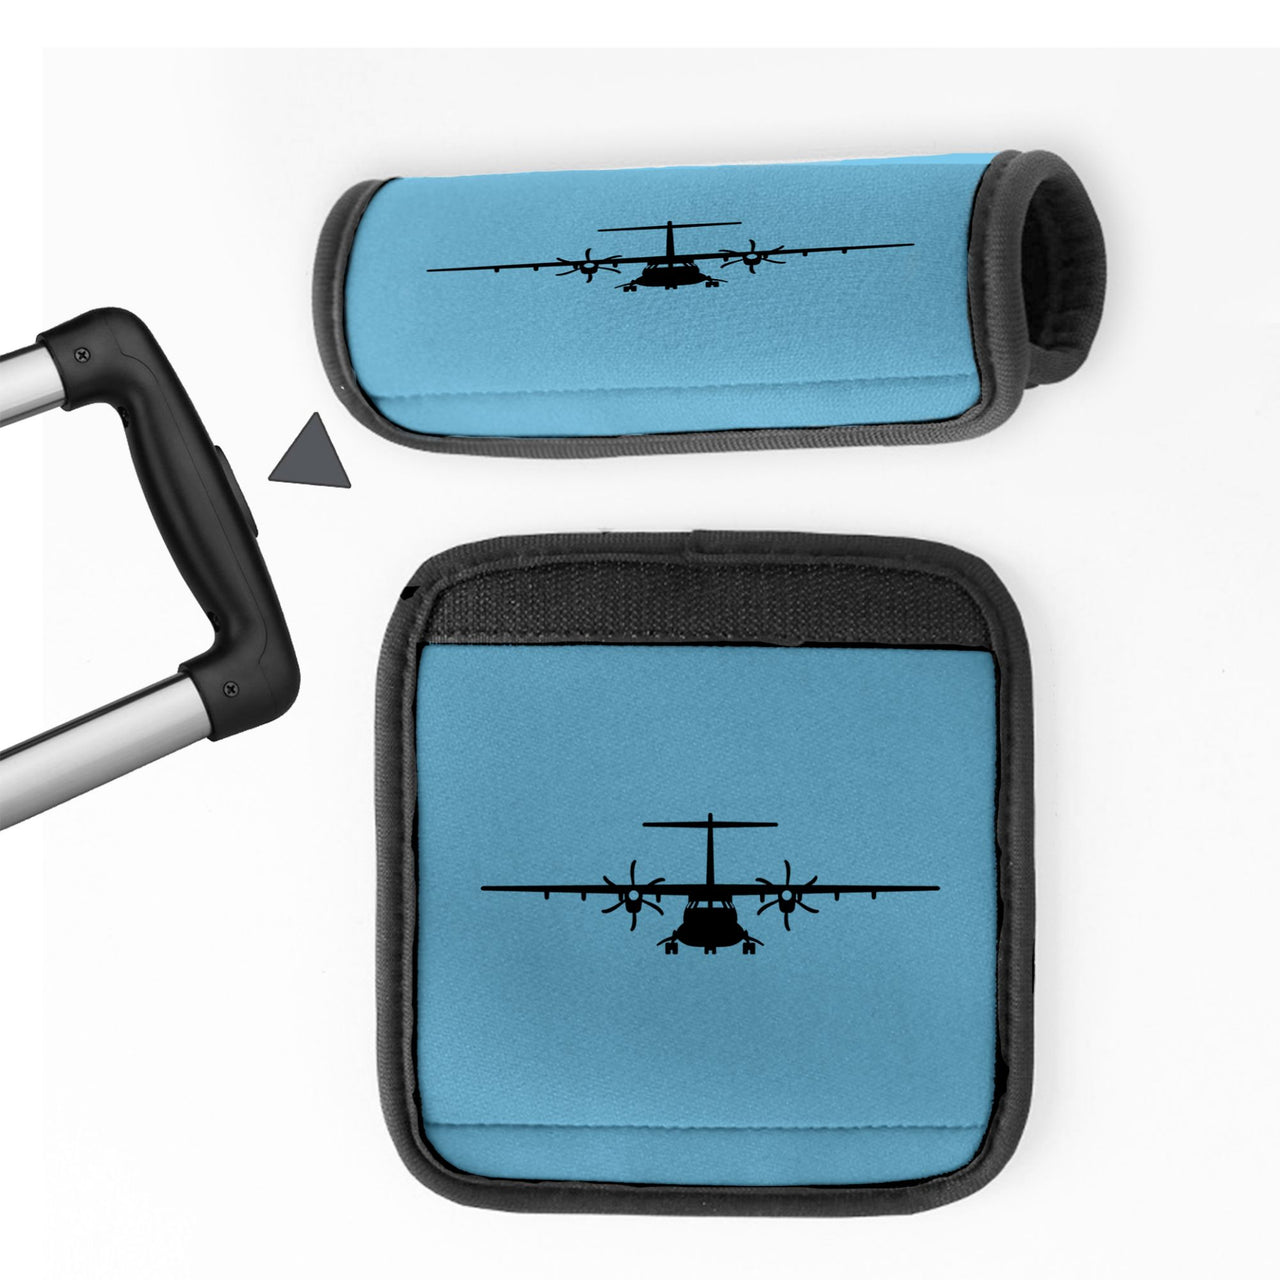 ATR-72 Silhouette Designed Neoprene Luggage Handle Covers